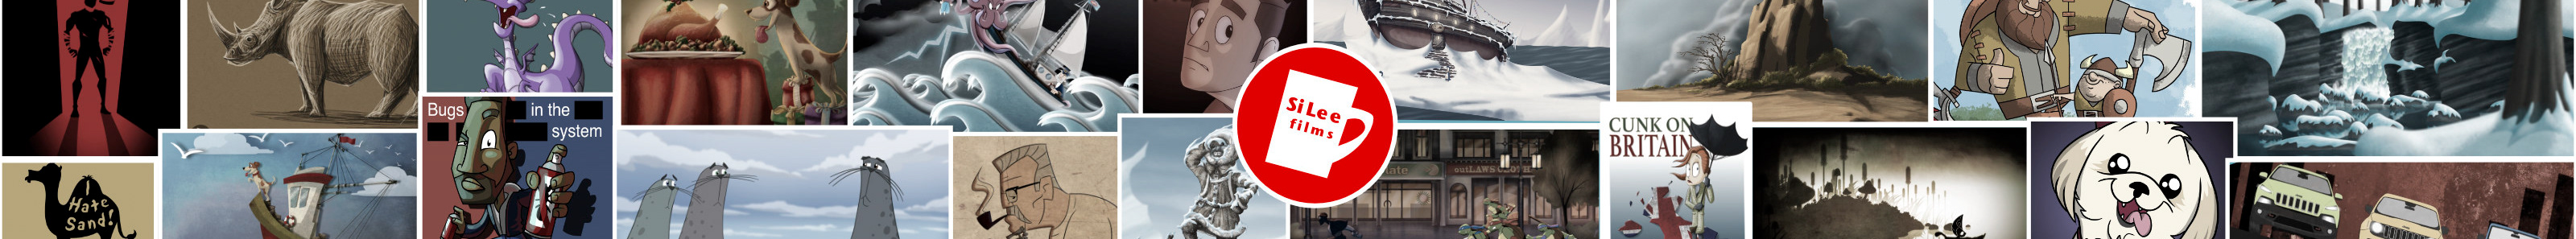 SiLee Filmss profilbanner